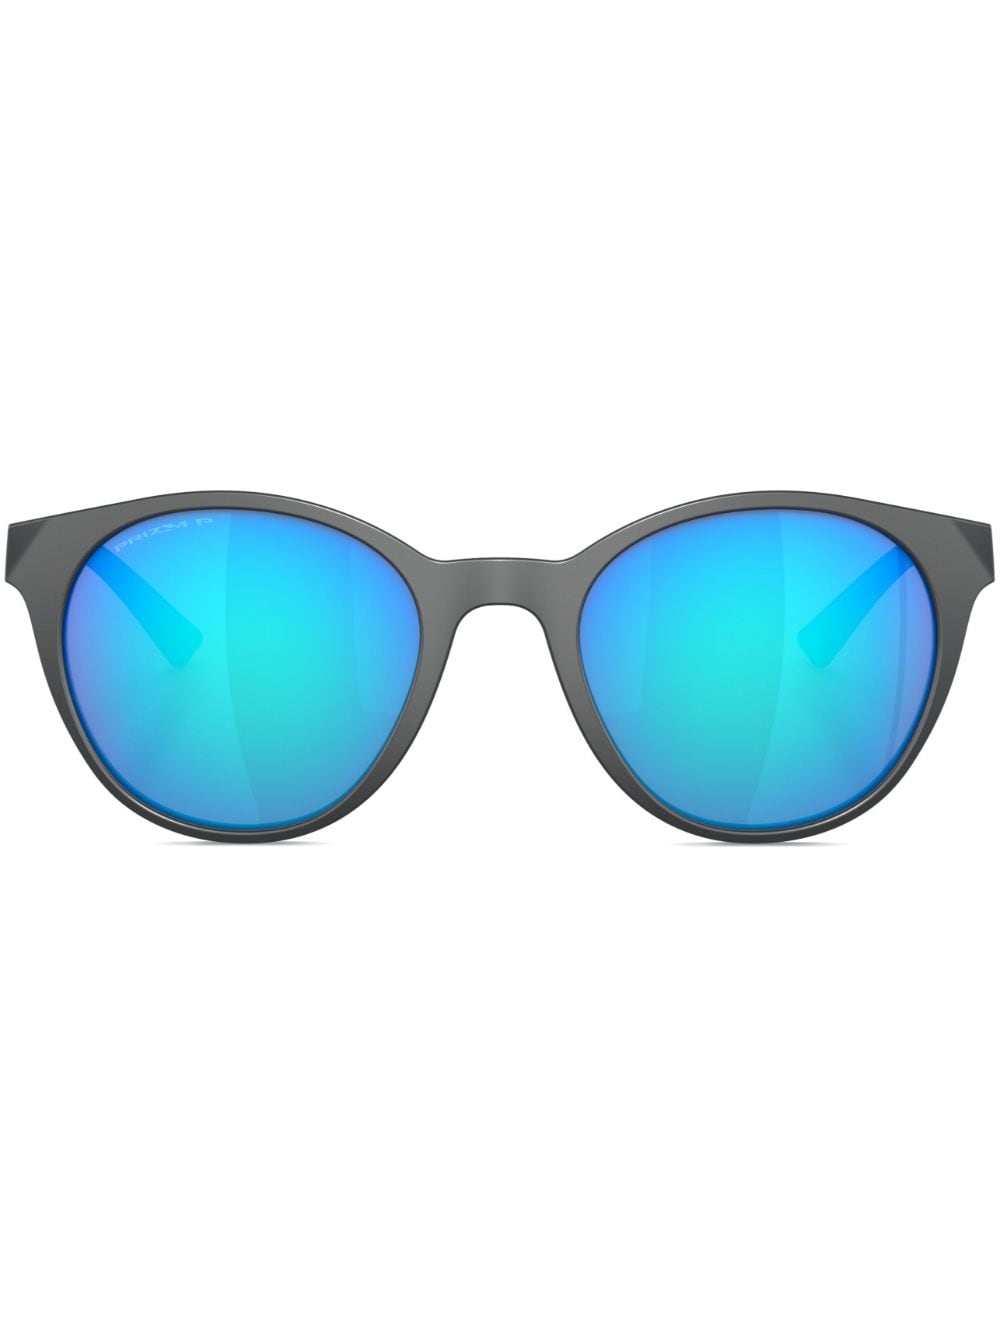 Image 1 of Oakley Spindrift round-frame sunglasses